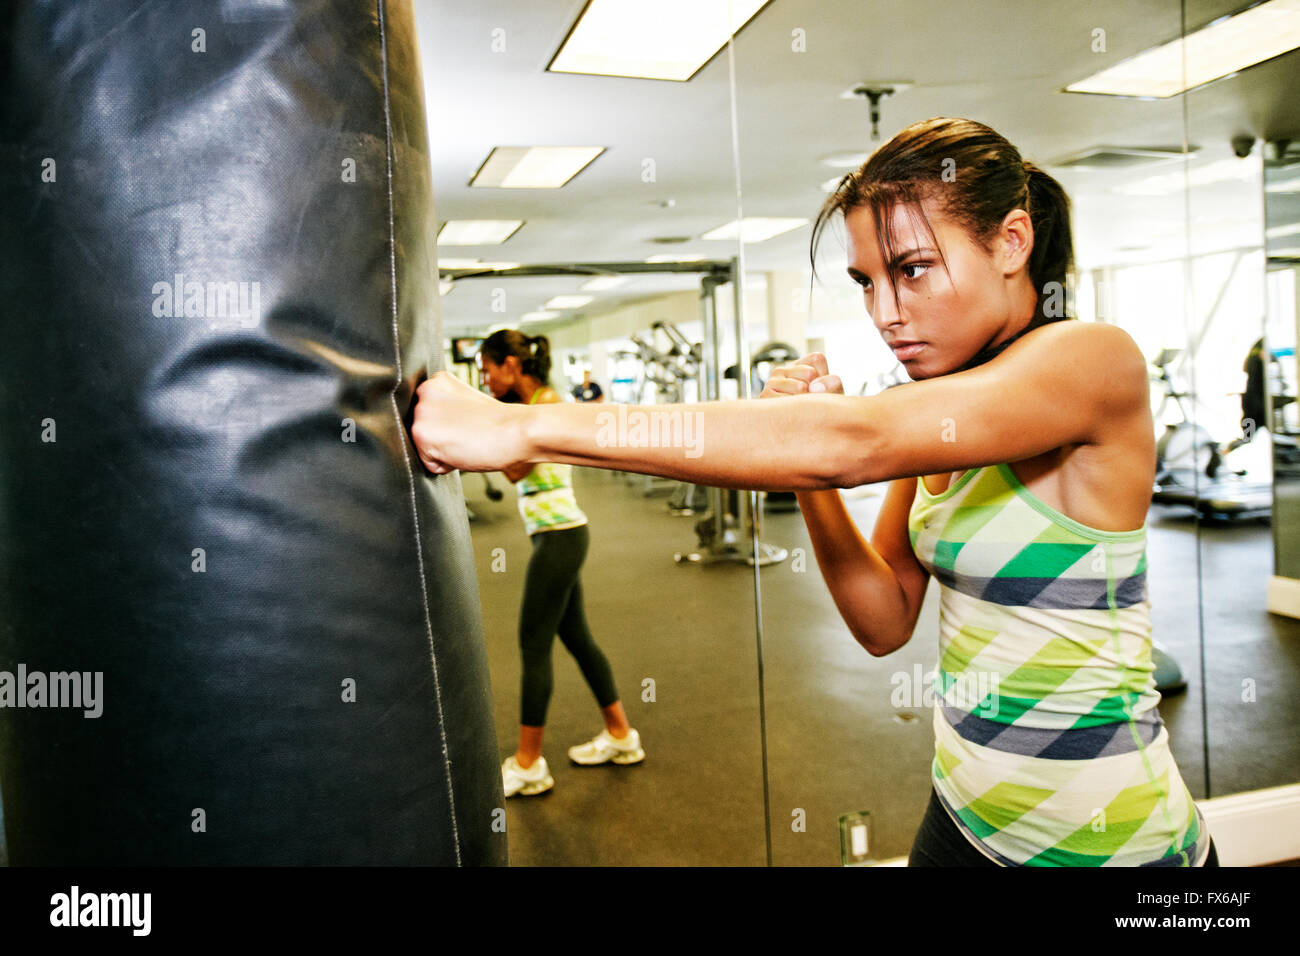 Mixed race woman hitting punching bag in gymnasium Stock Photo